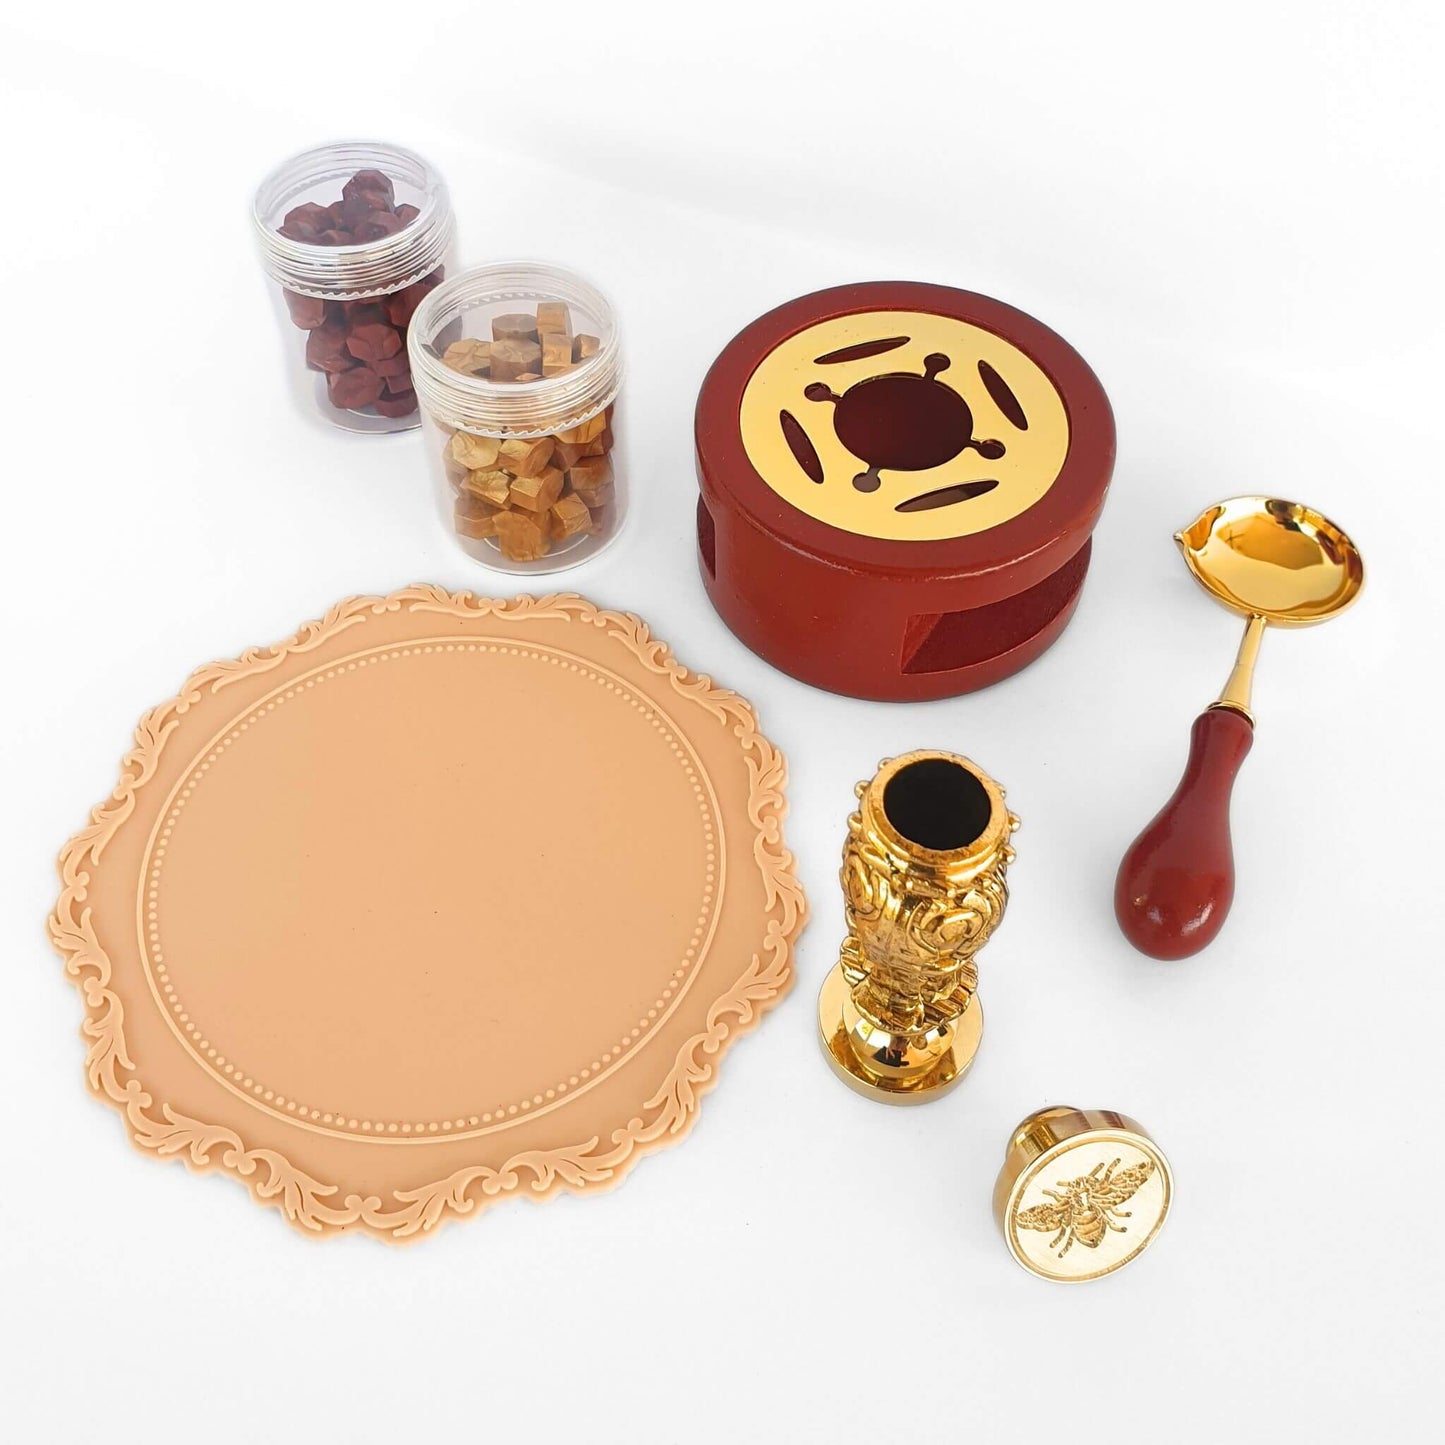 Tuscan wax seal kit items